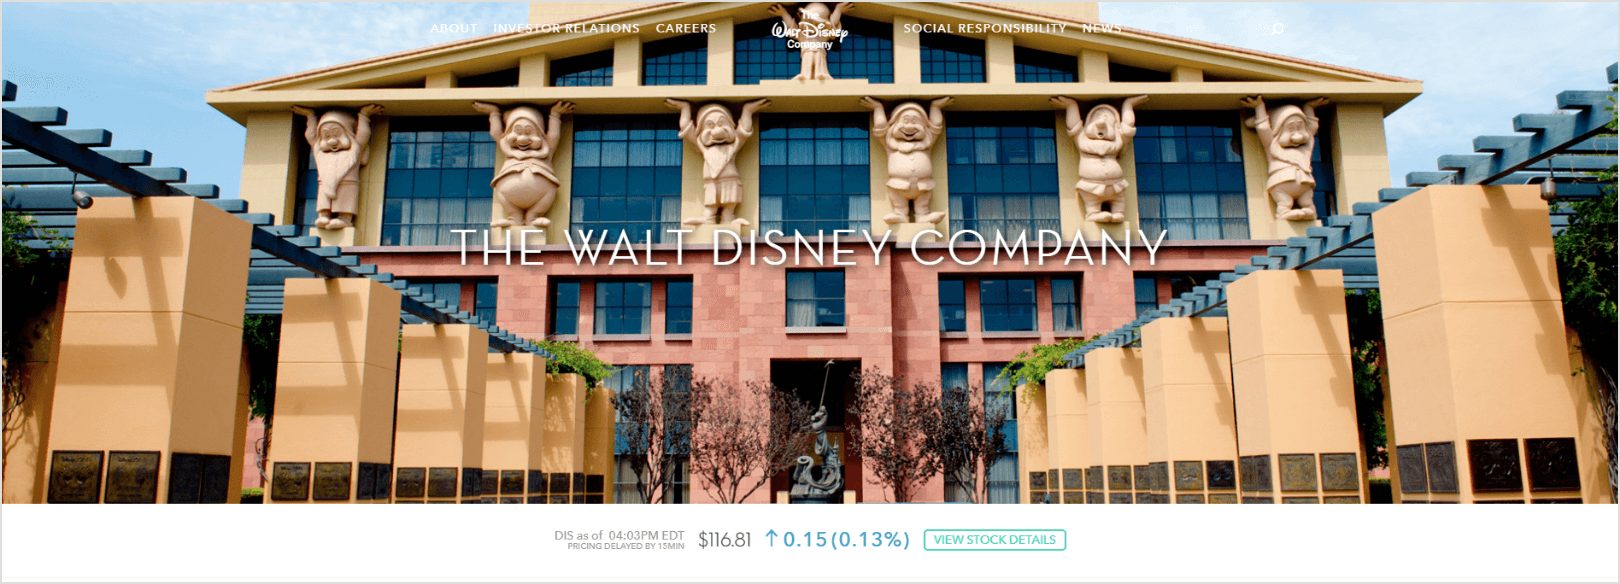 La Walt Disney Company